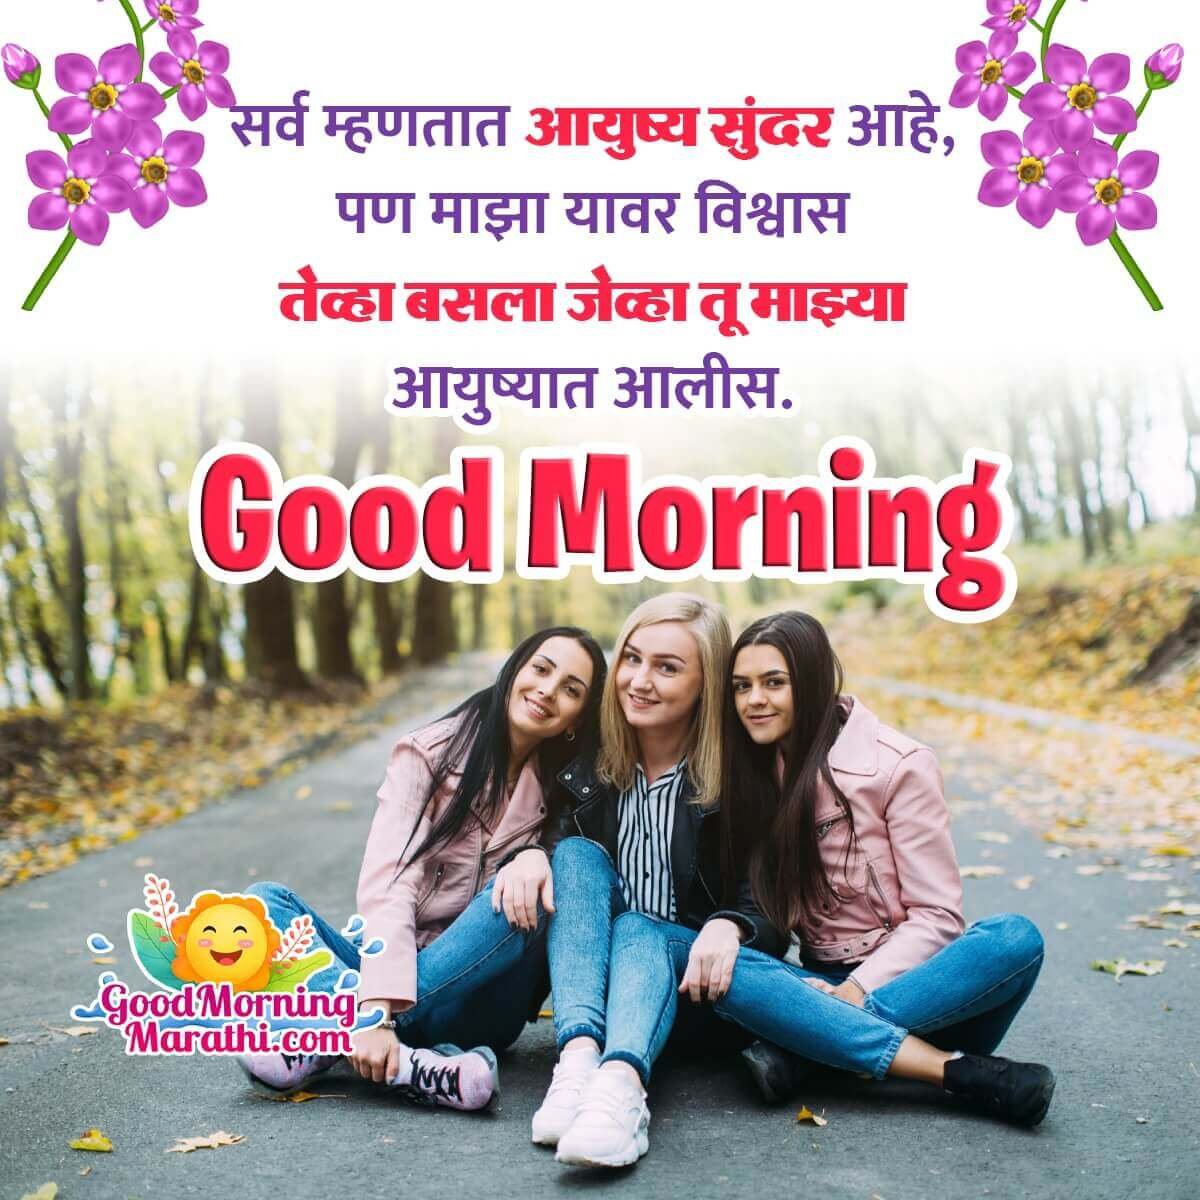 Good Morning Friend Marathi Message For Girls